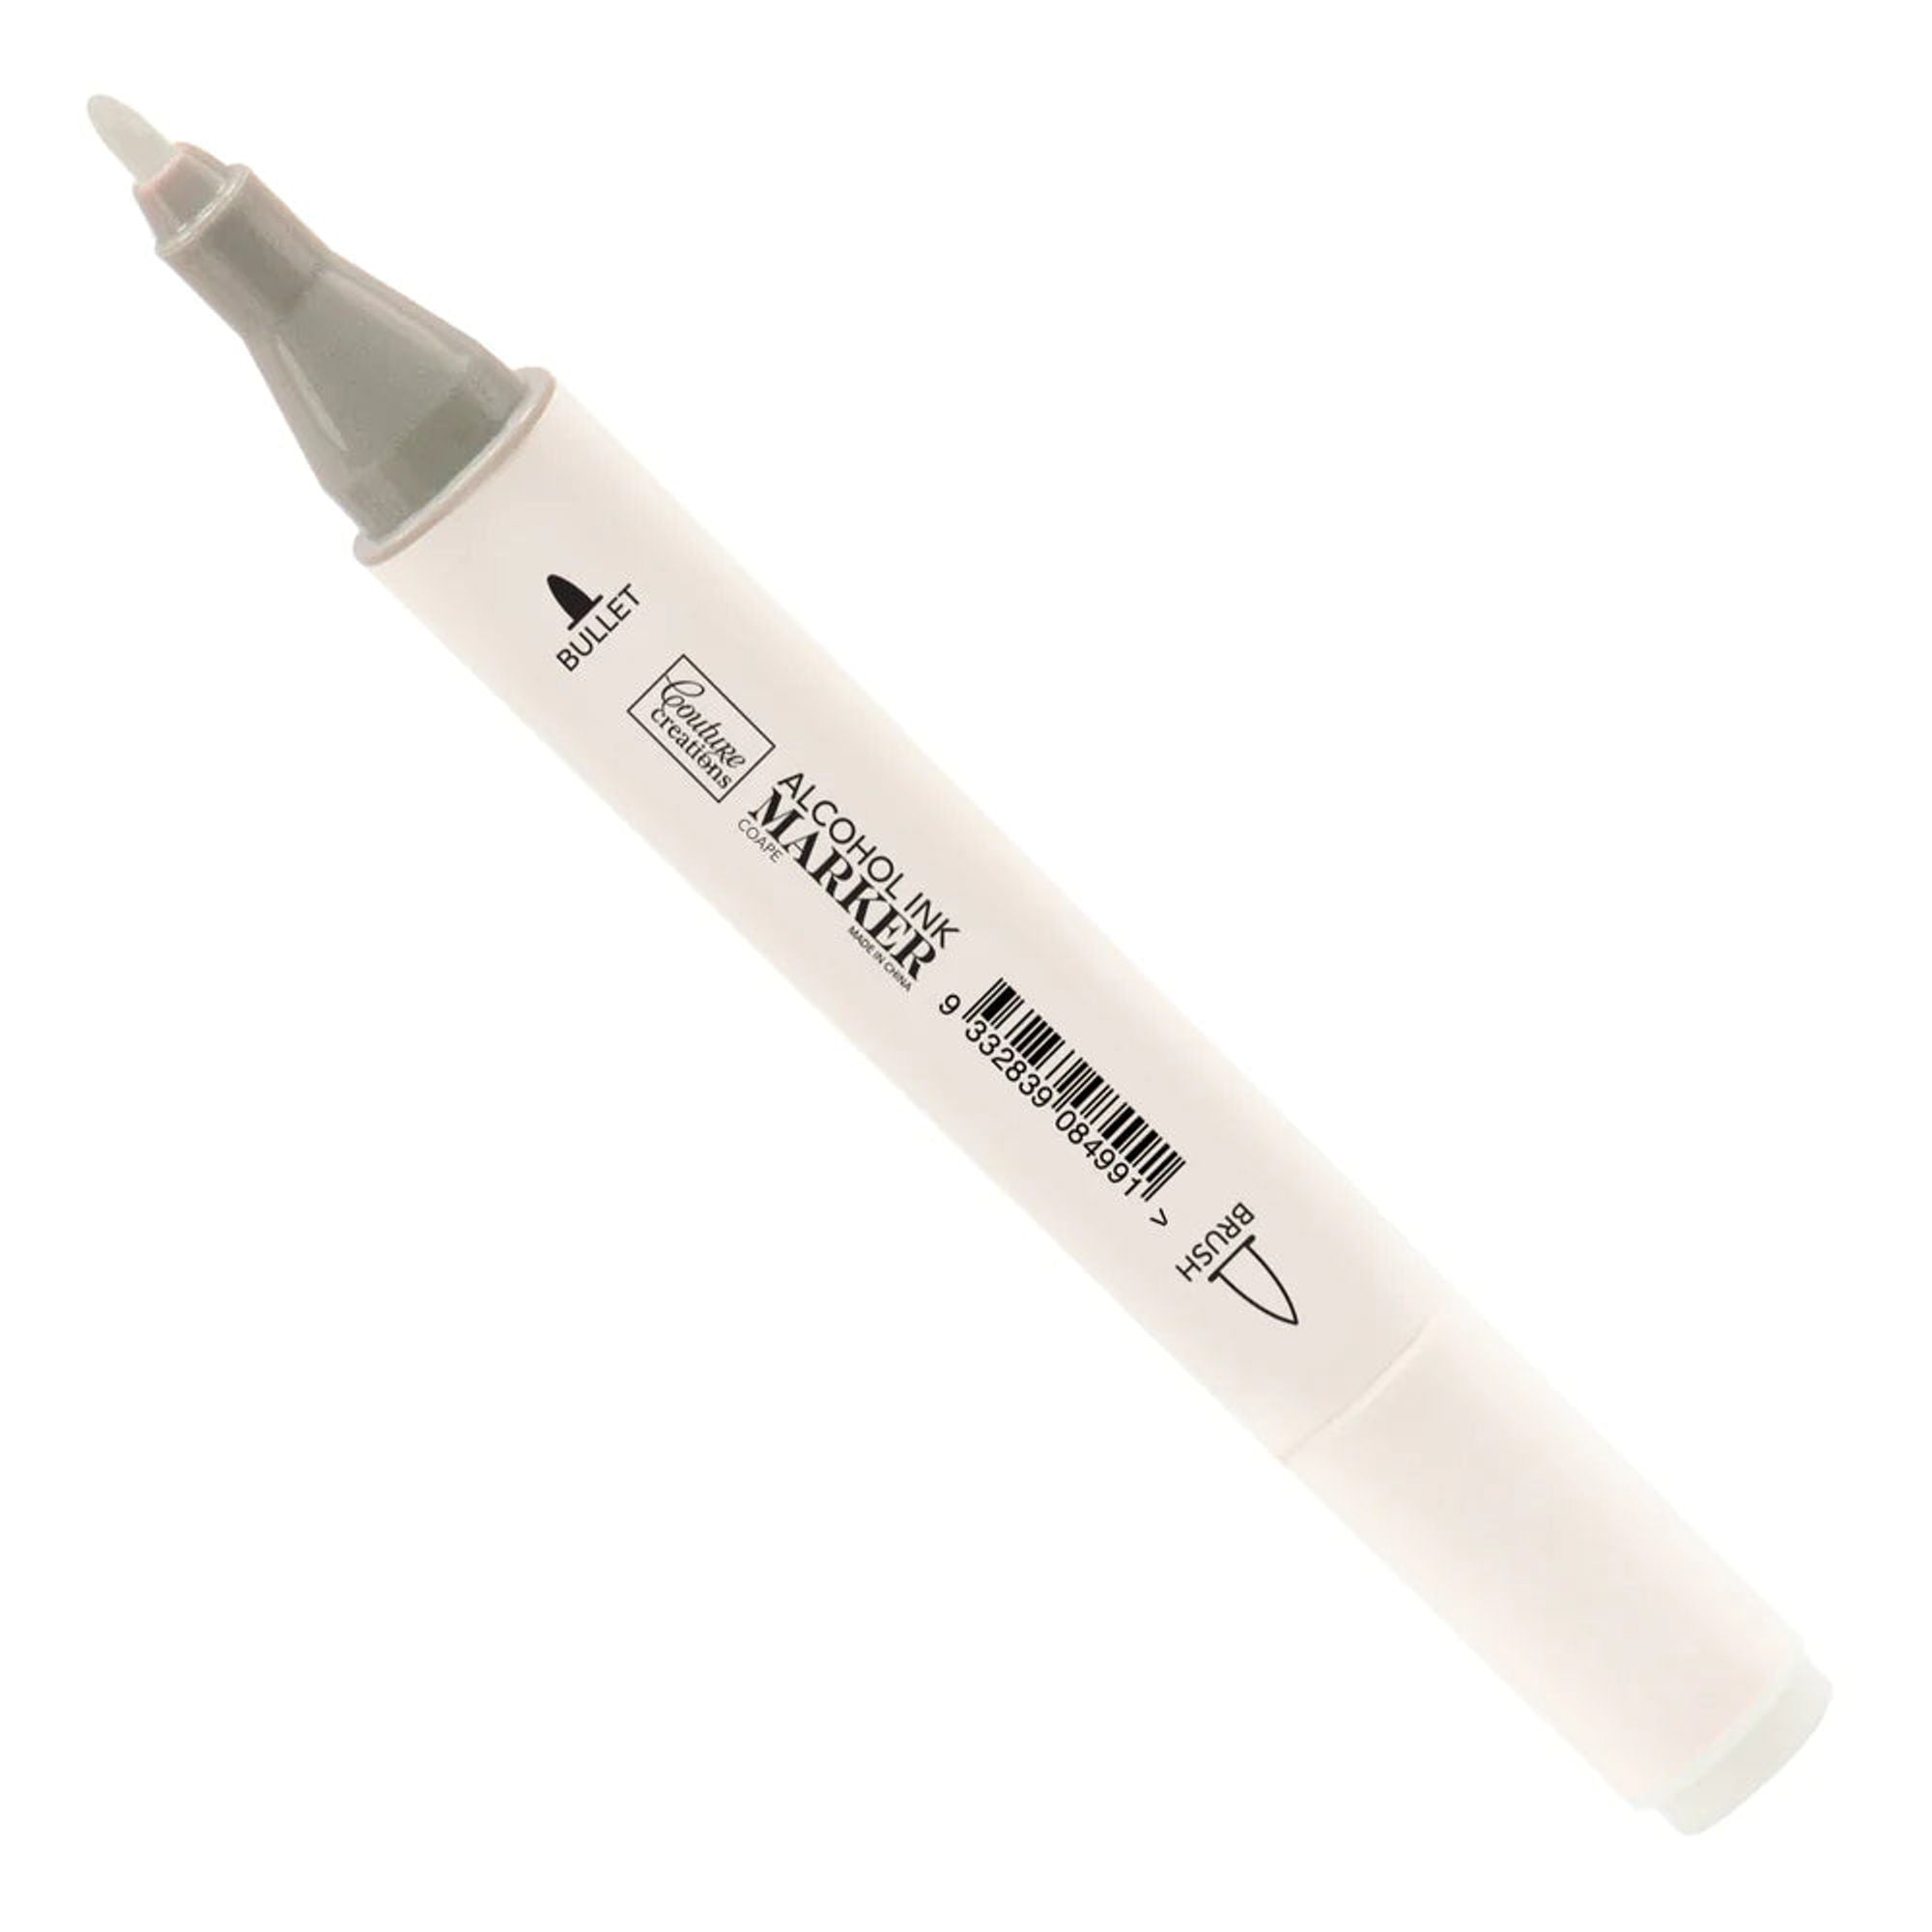  Skin Tone Alcohol Marker Set - 25 Dual-Tipped Brushes